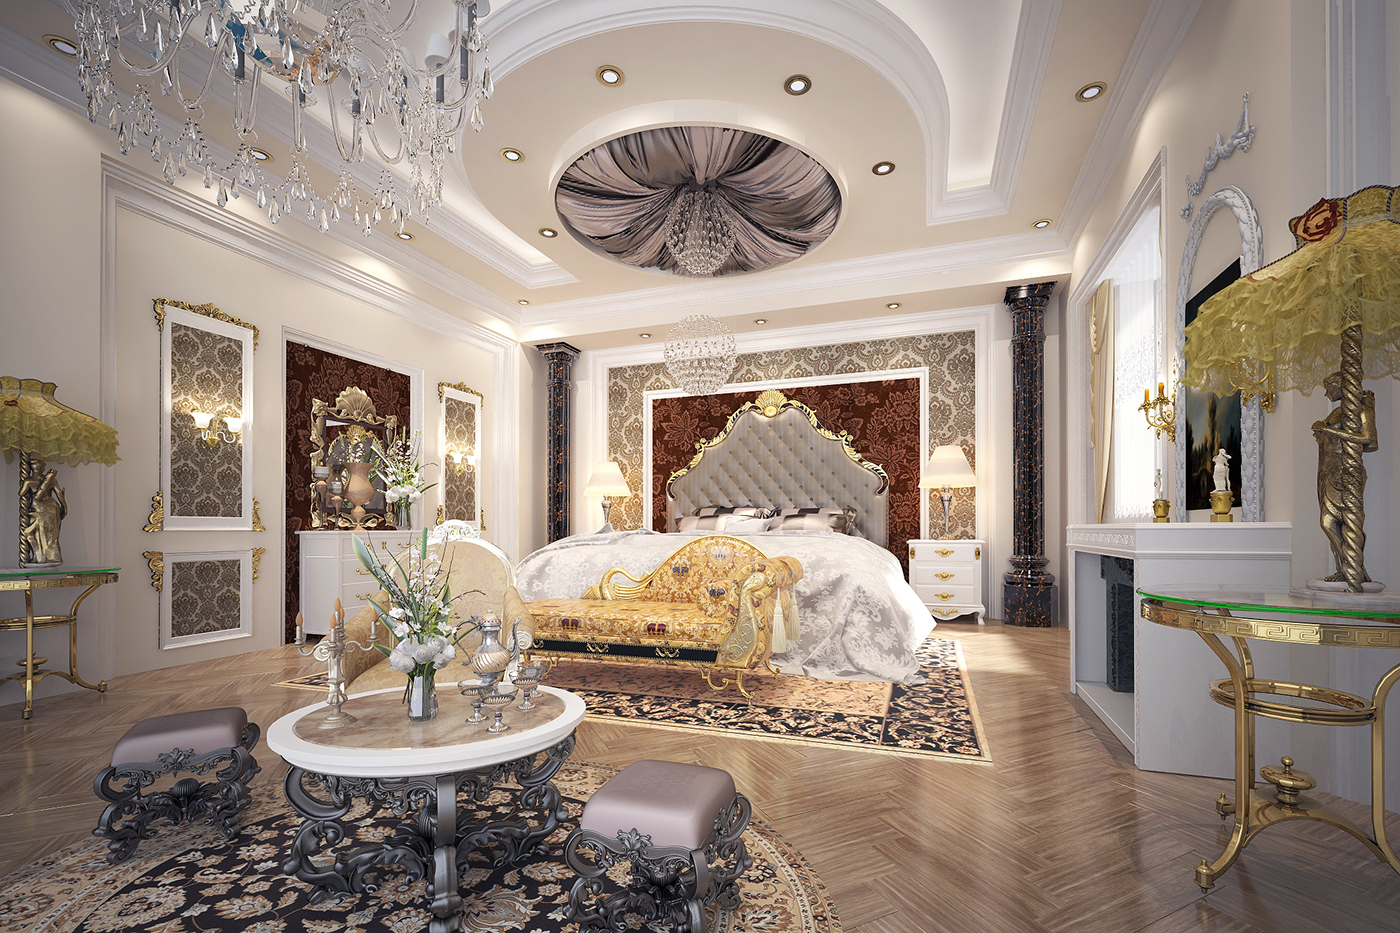 Luxury bedroom on Behance